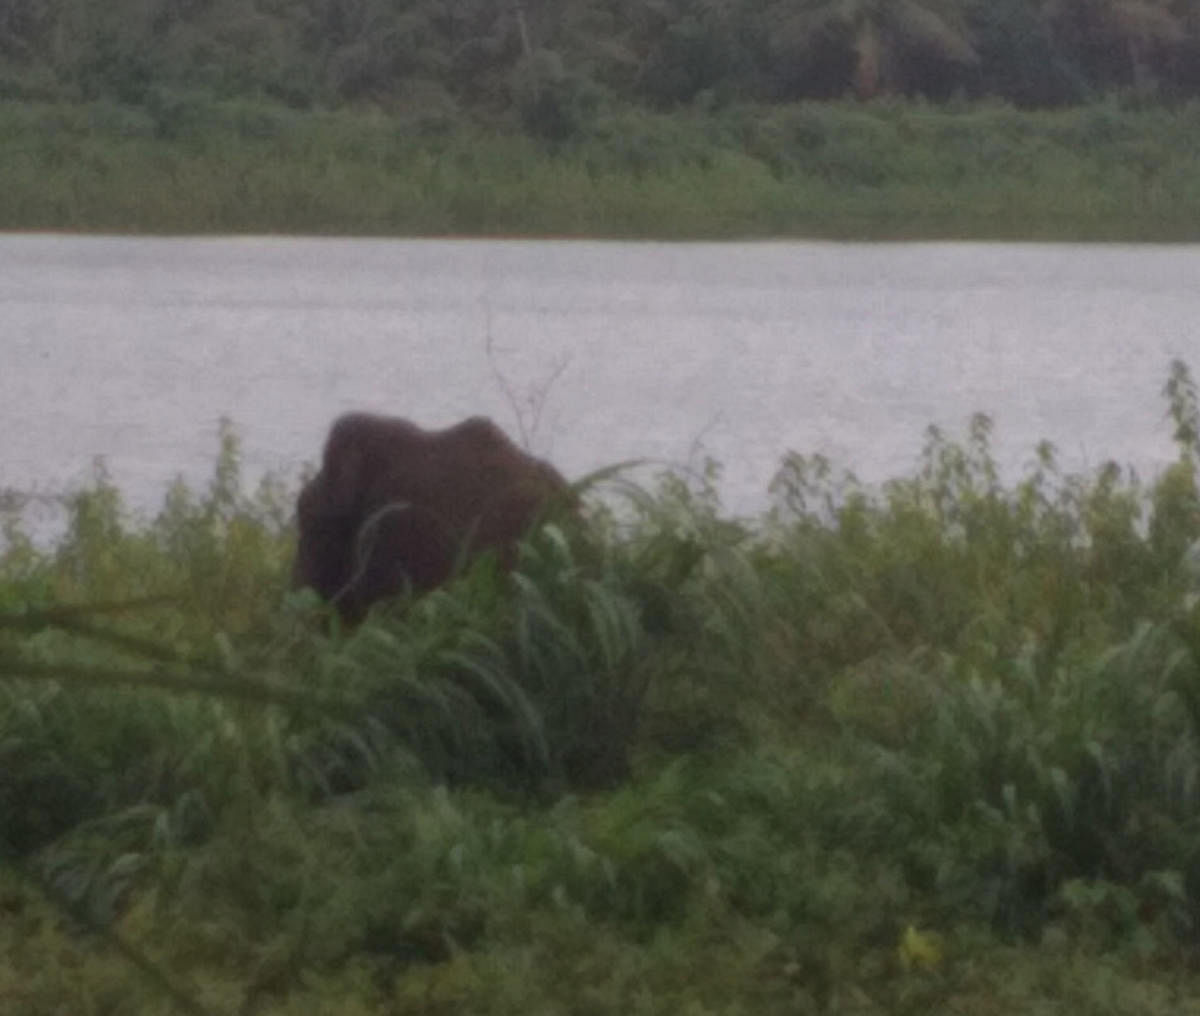 A wild elephant was spotted at Hirekaturu village in Tarikere taluk, on Monday.